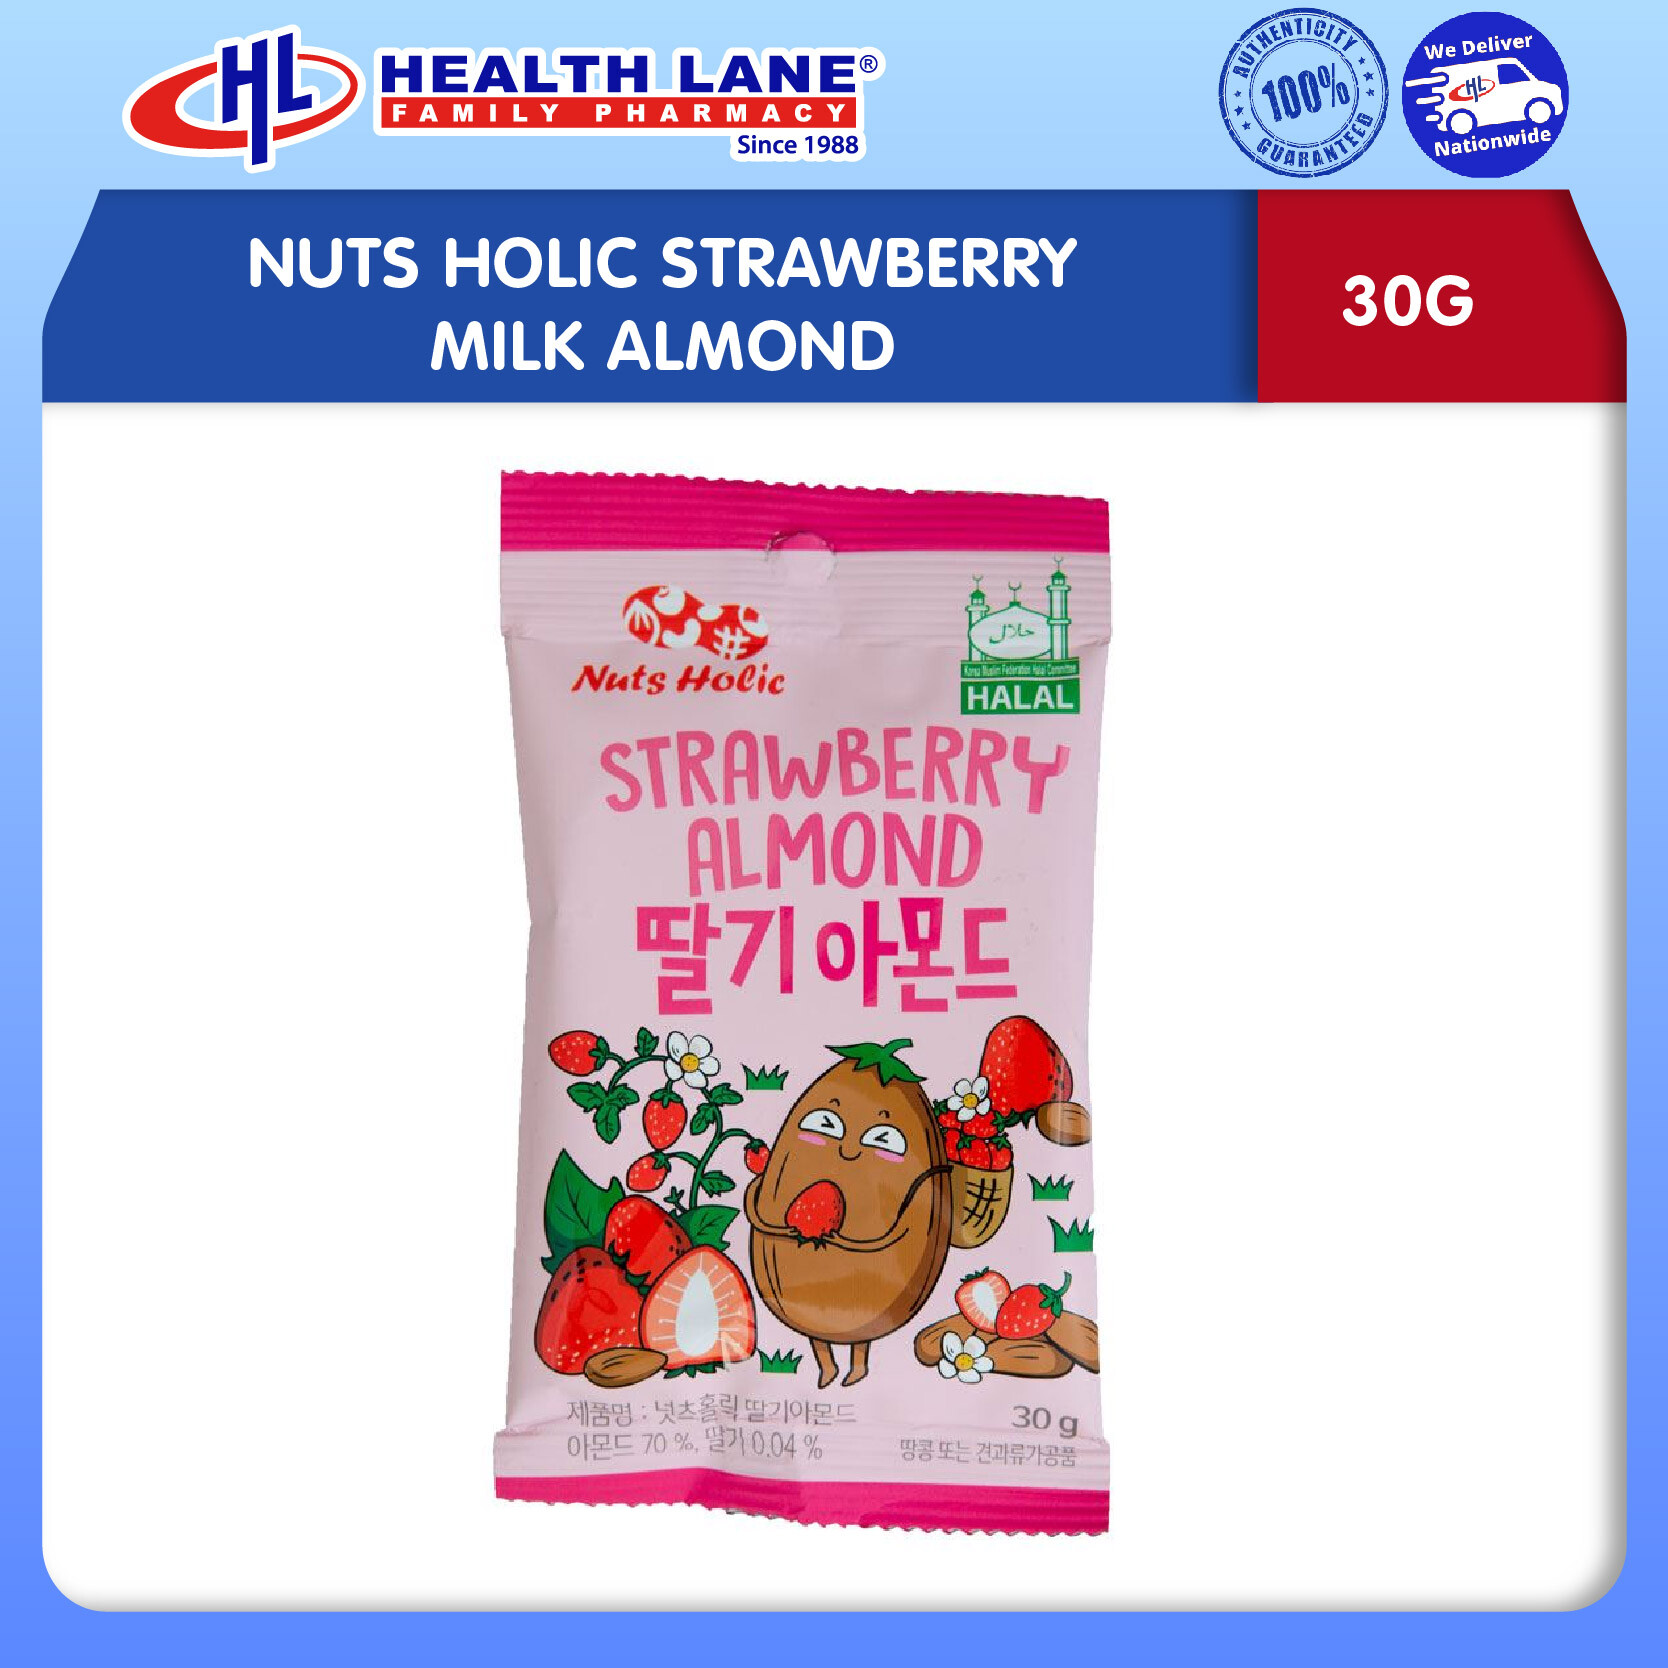 NUTS HOLIC STRAWBERRY MILK ALMOND (30G)